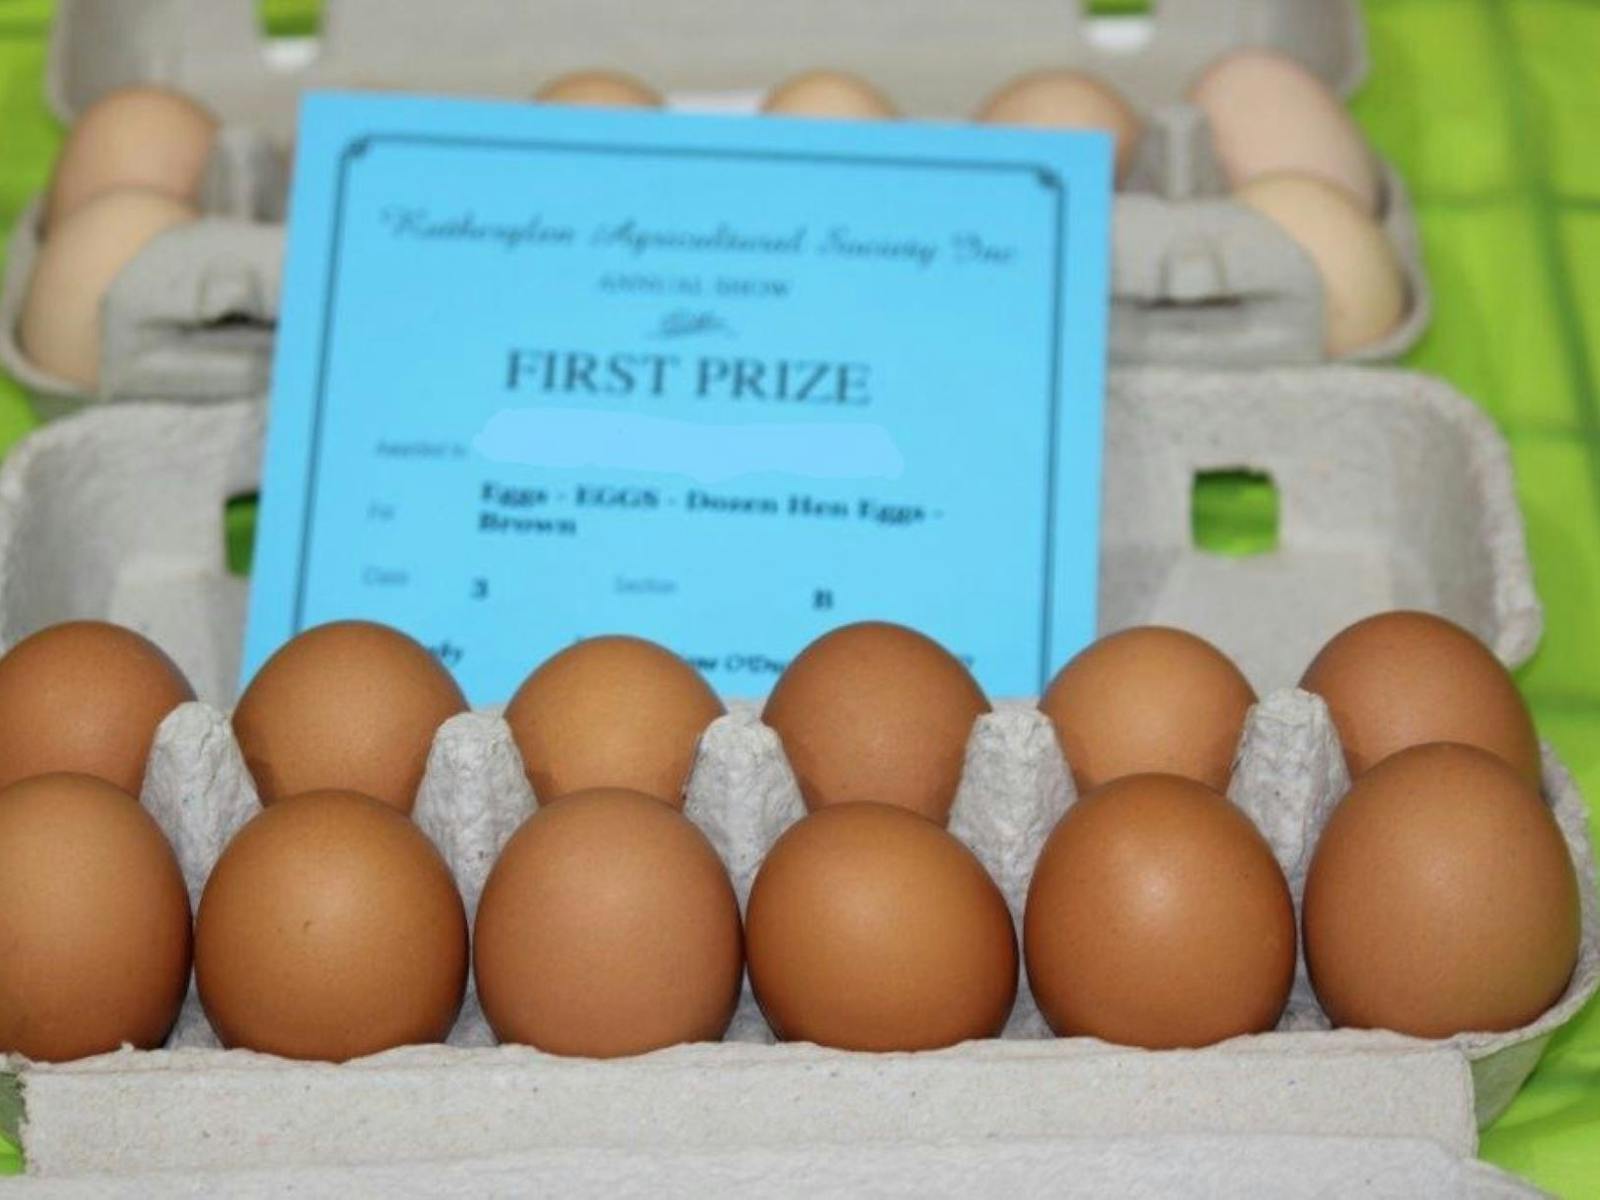 Egg carton containing a dozen brown hen eggs, winning first prize at show.